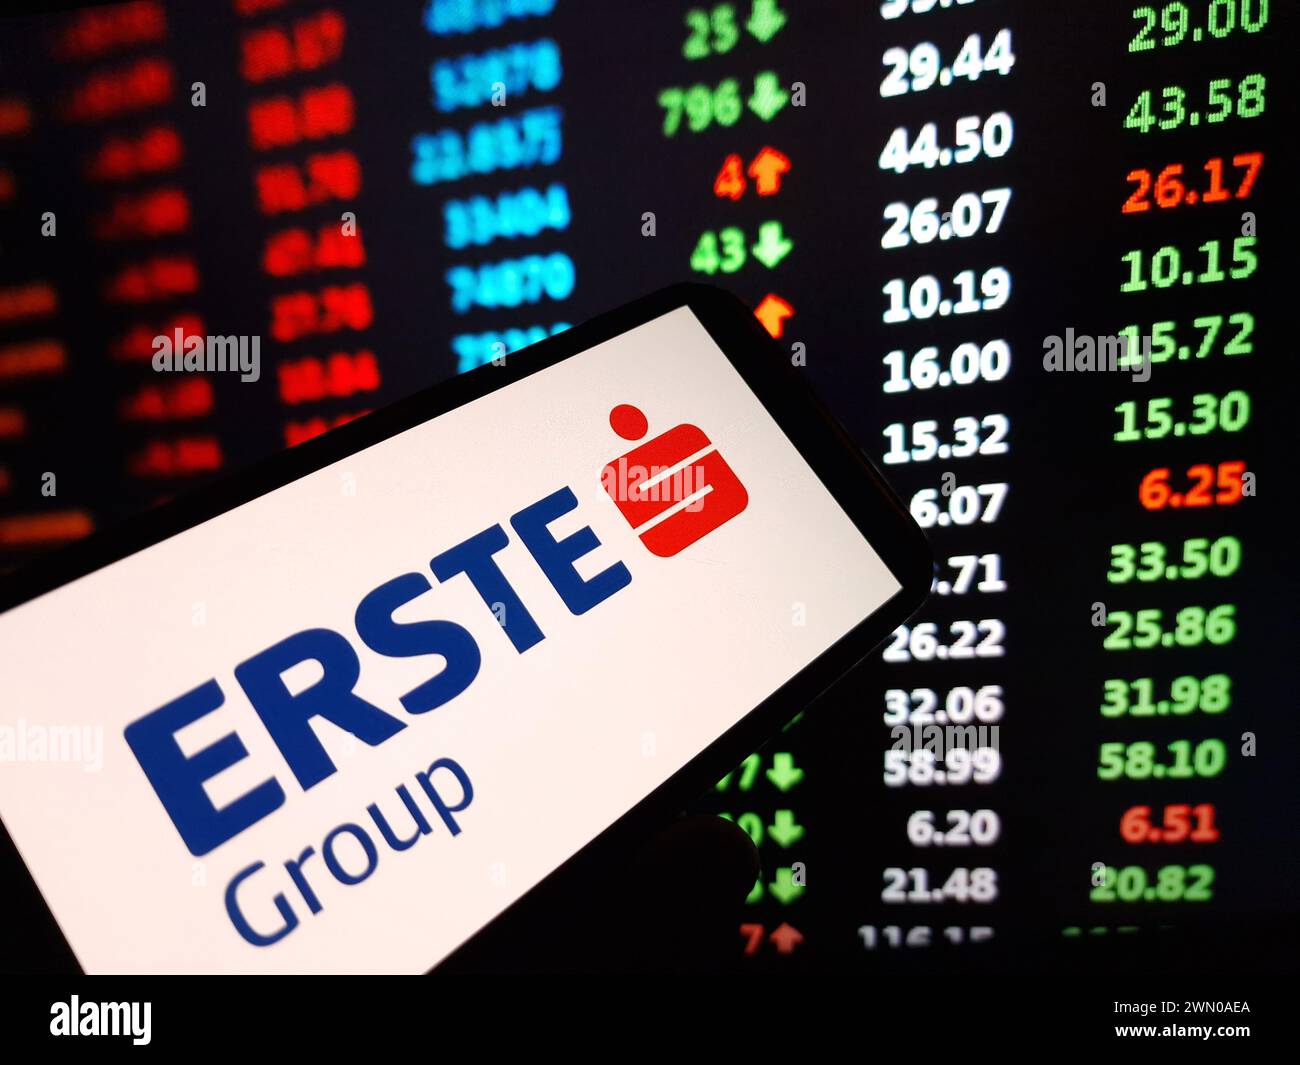 Konskie, Poland - February 24, 2024: Erste Group Bank company logo displayed on mobile phone Stock Photo